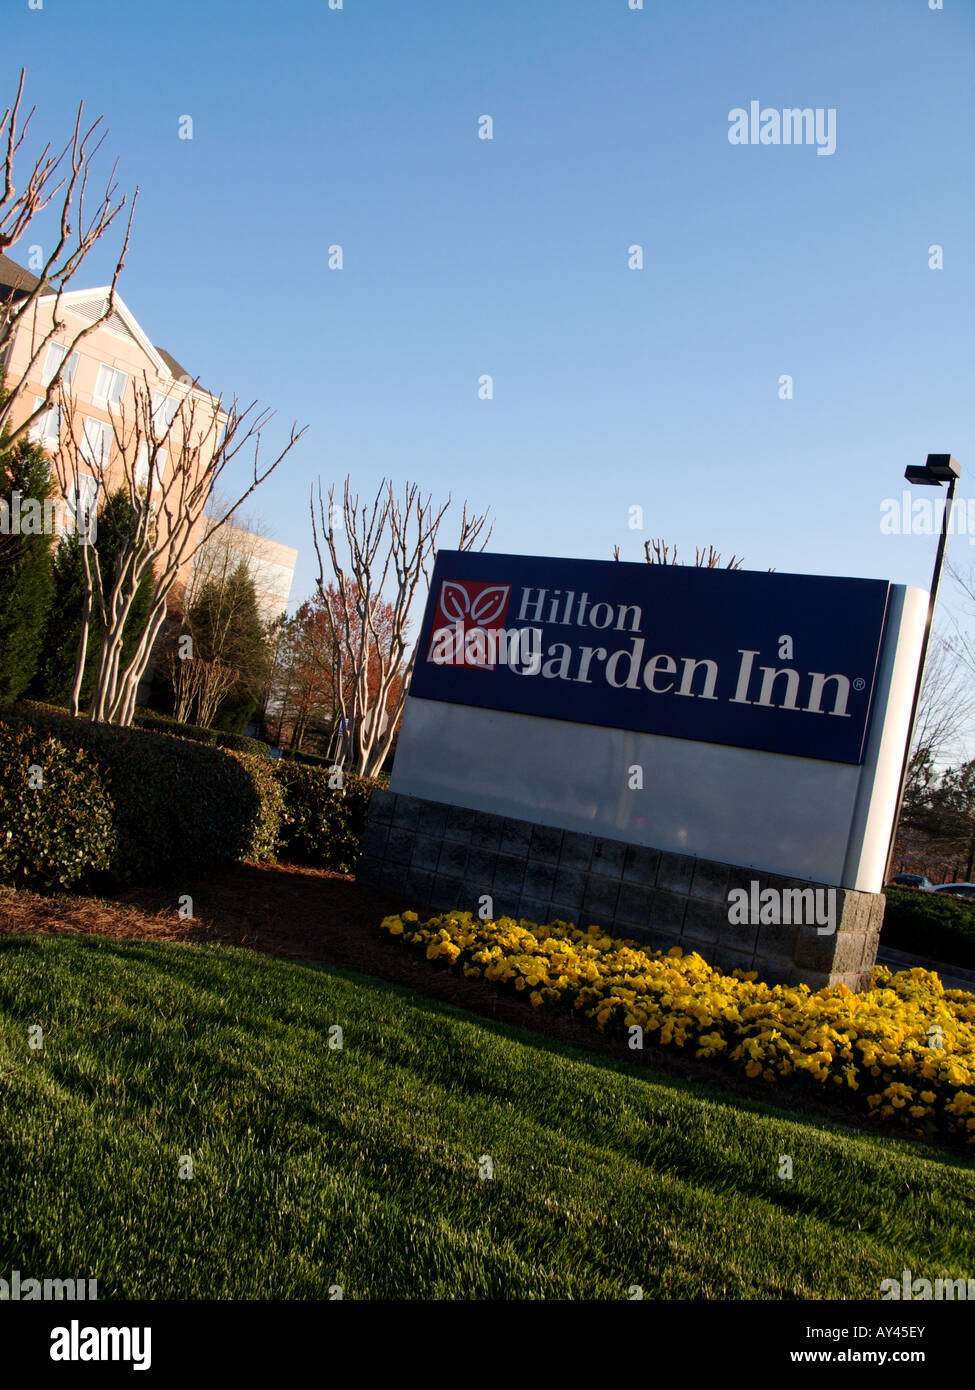 Hilton Garden Inn in Georgia, USA Stockfoto